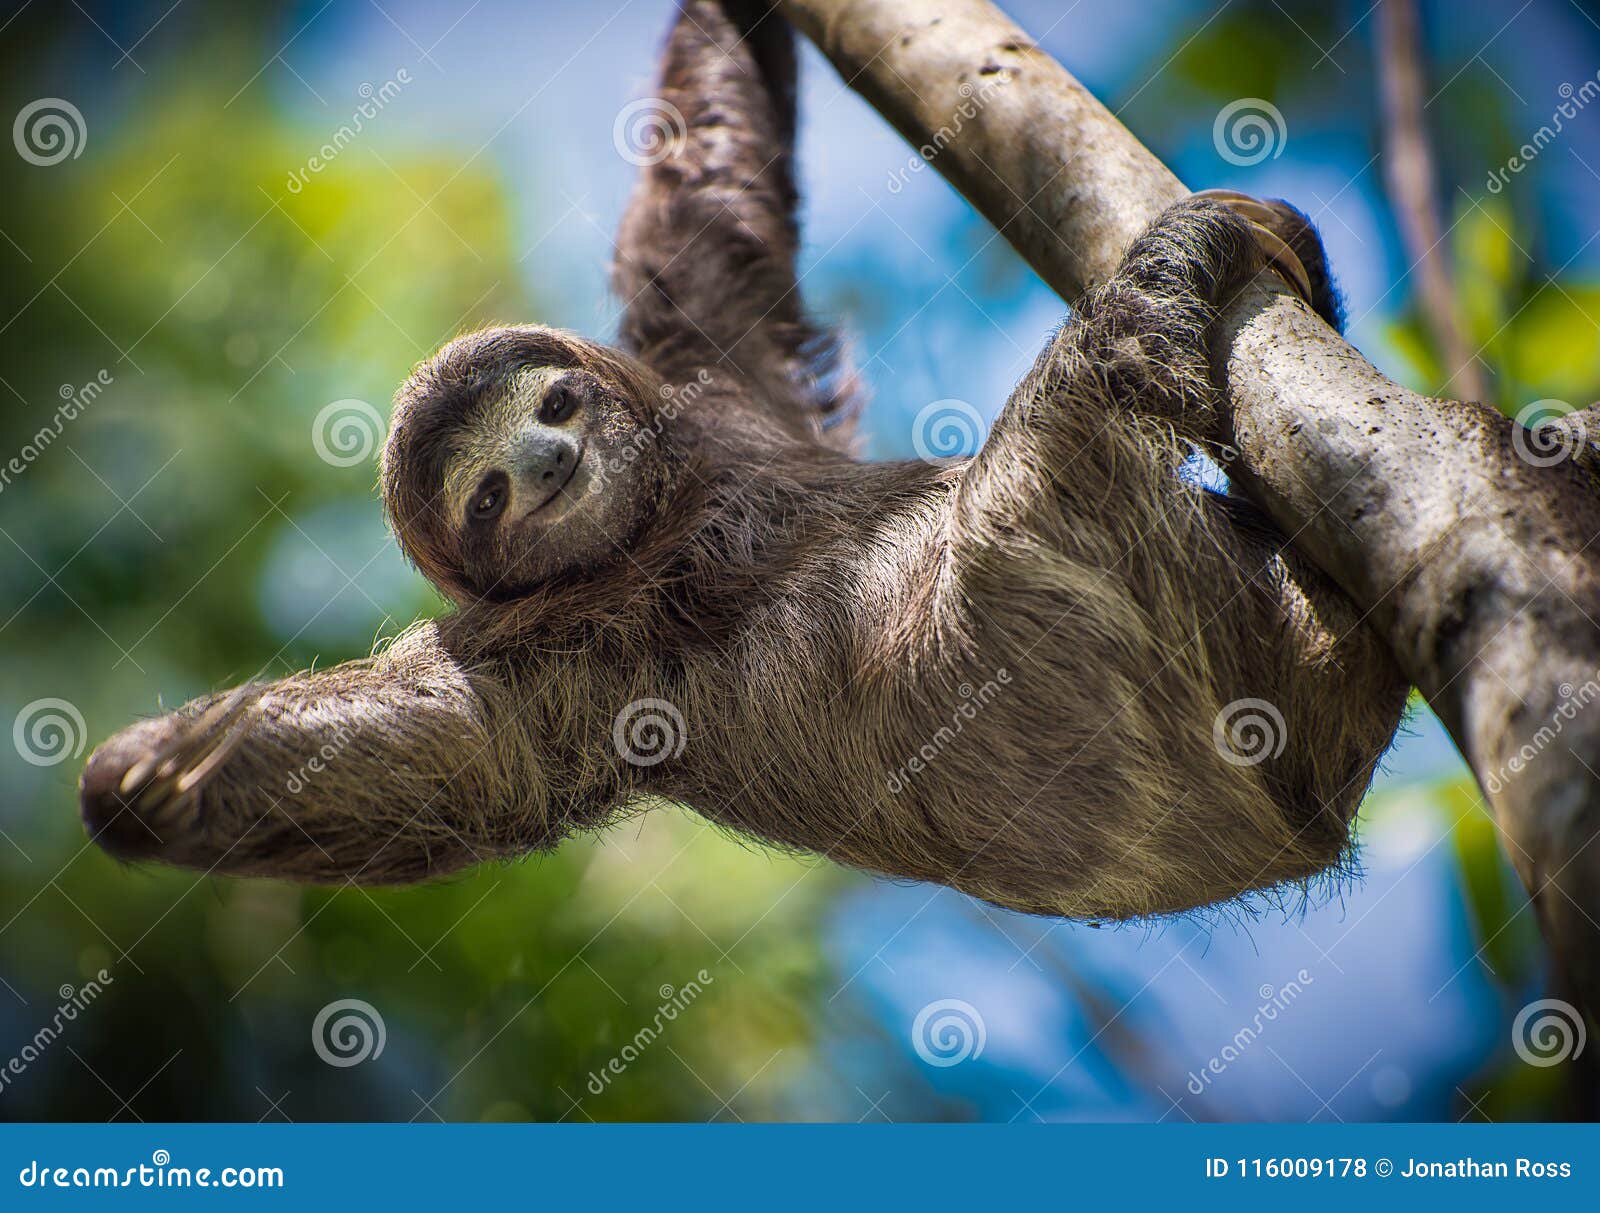 sloth smiling at you